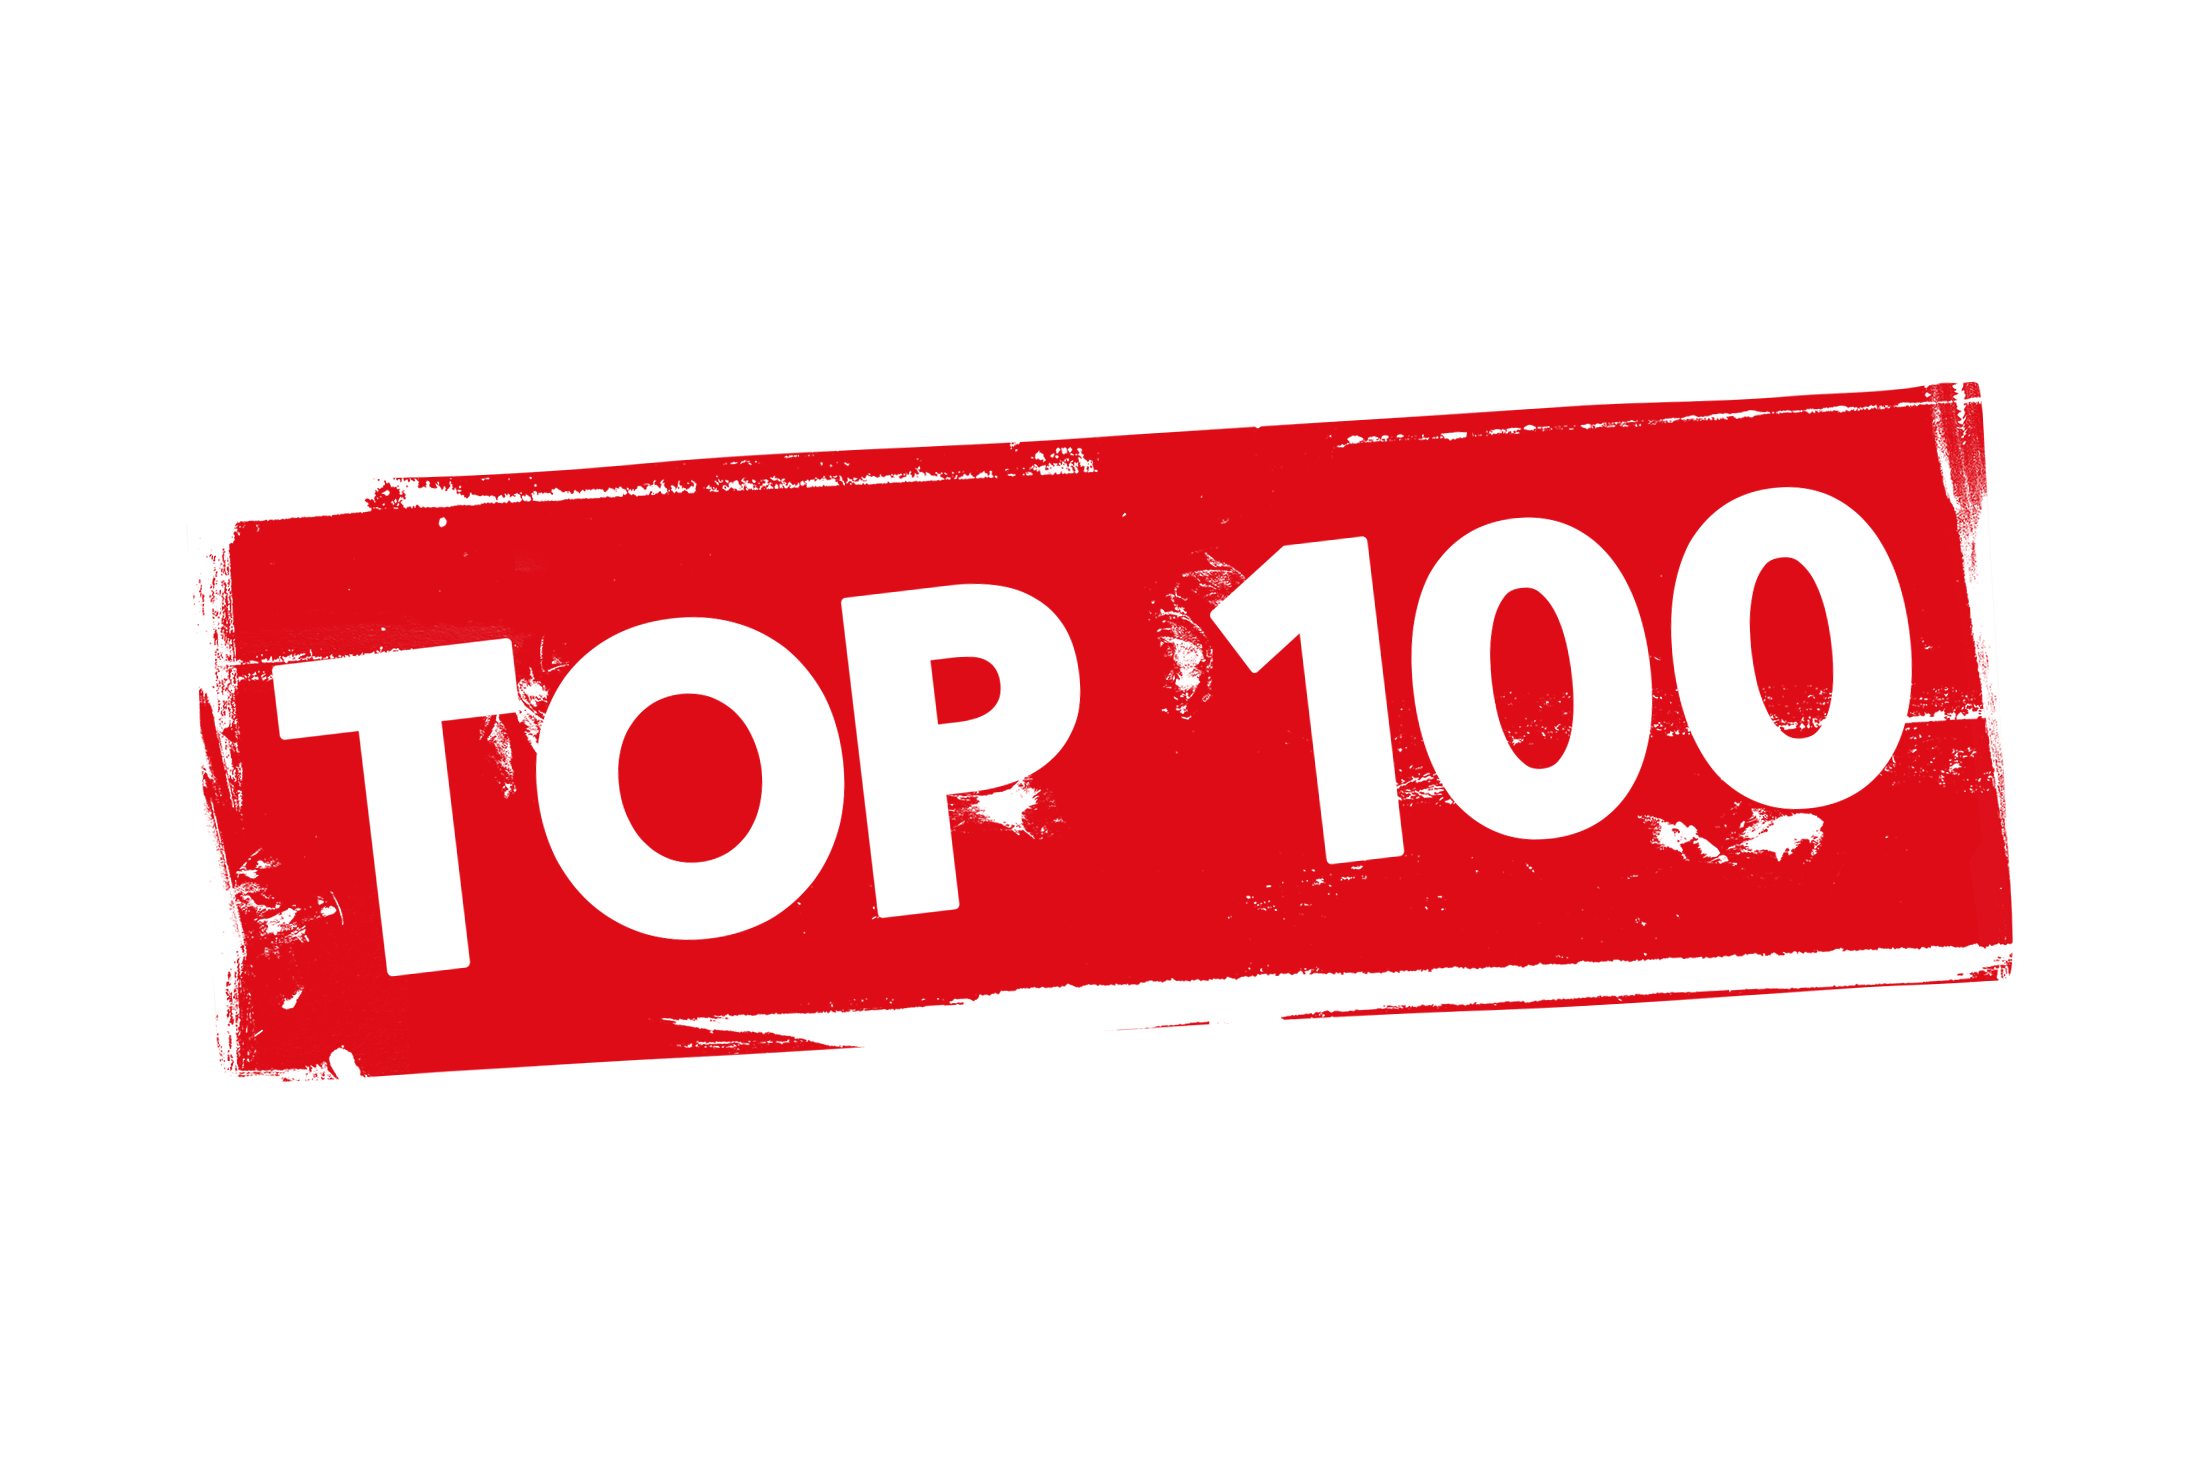 Grunge top 100 label PSD